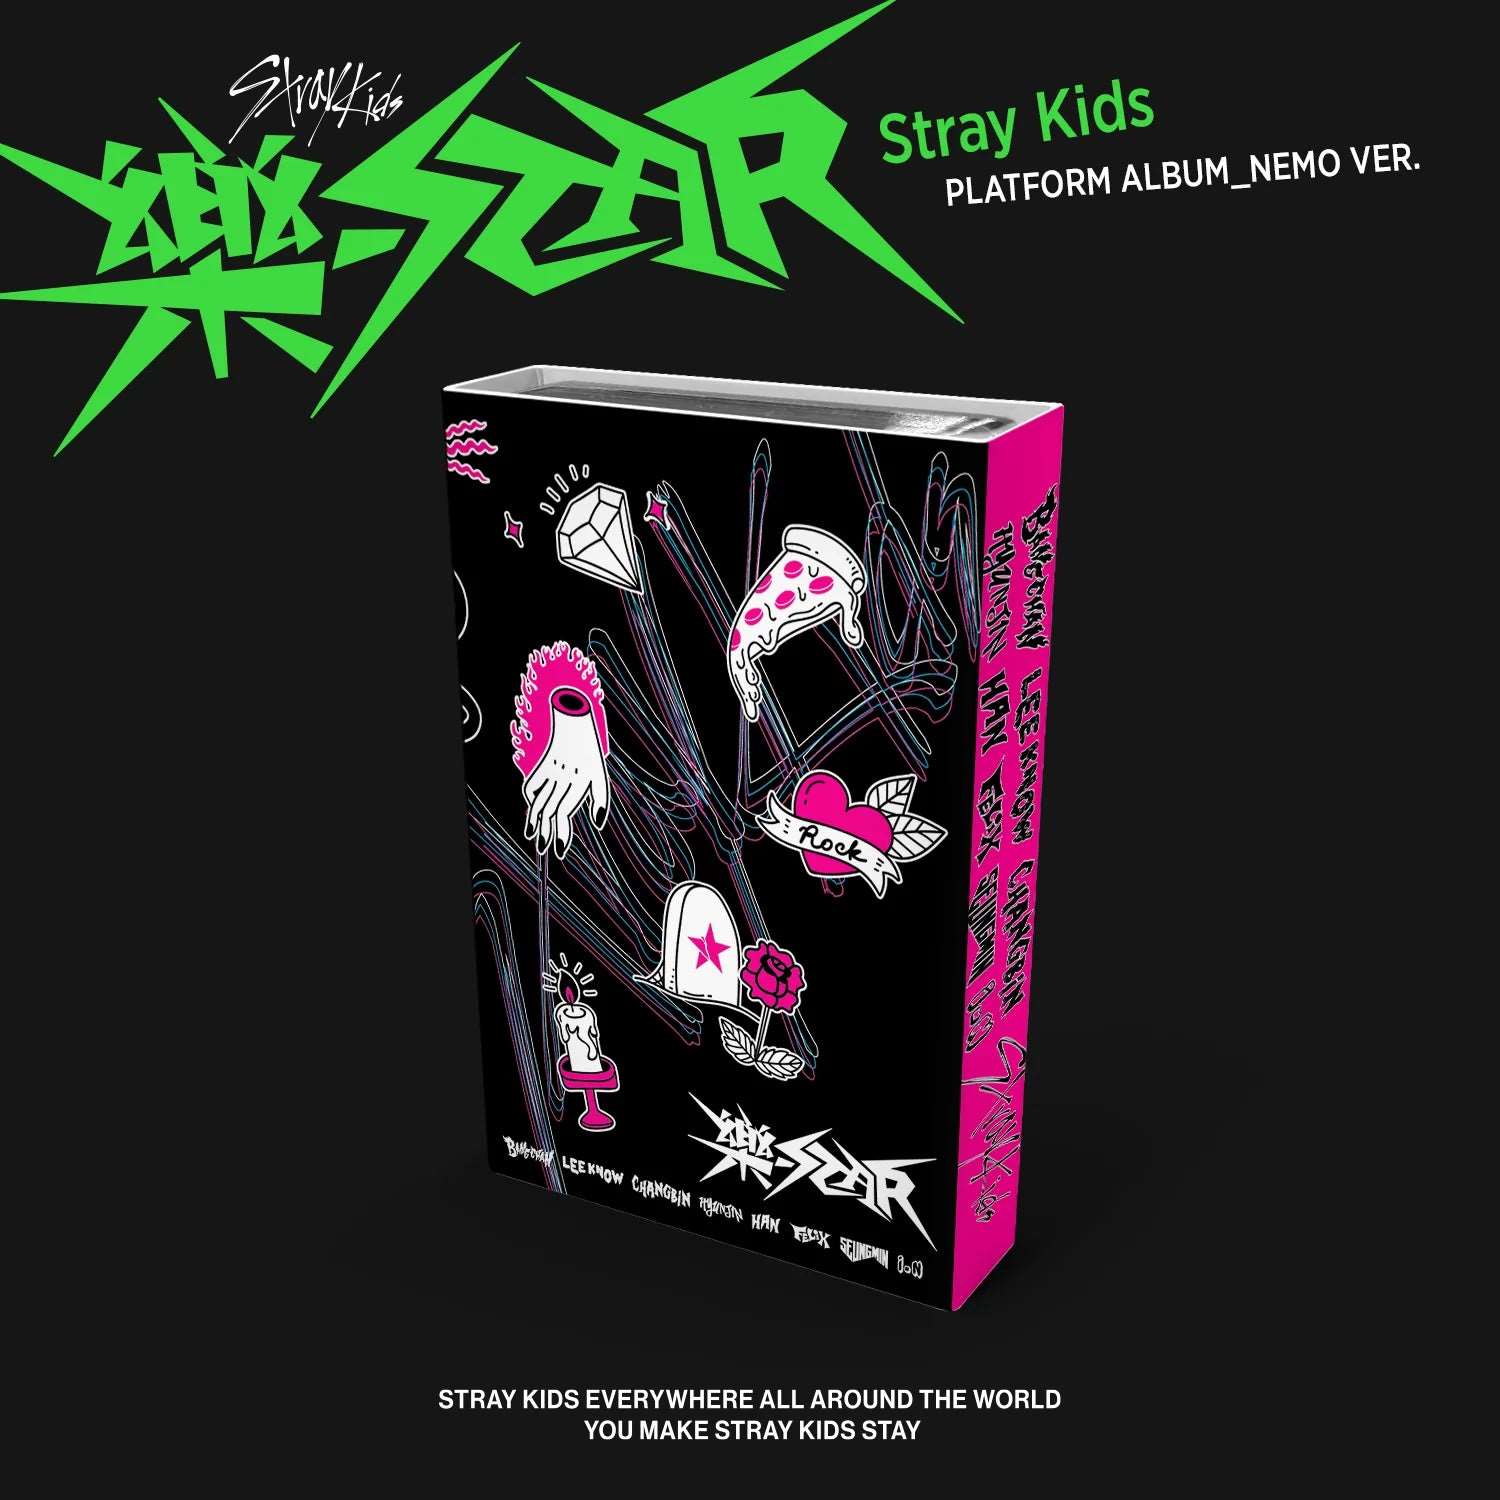 STRAY KIDS Rockstar Platform Nemo Album